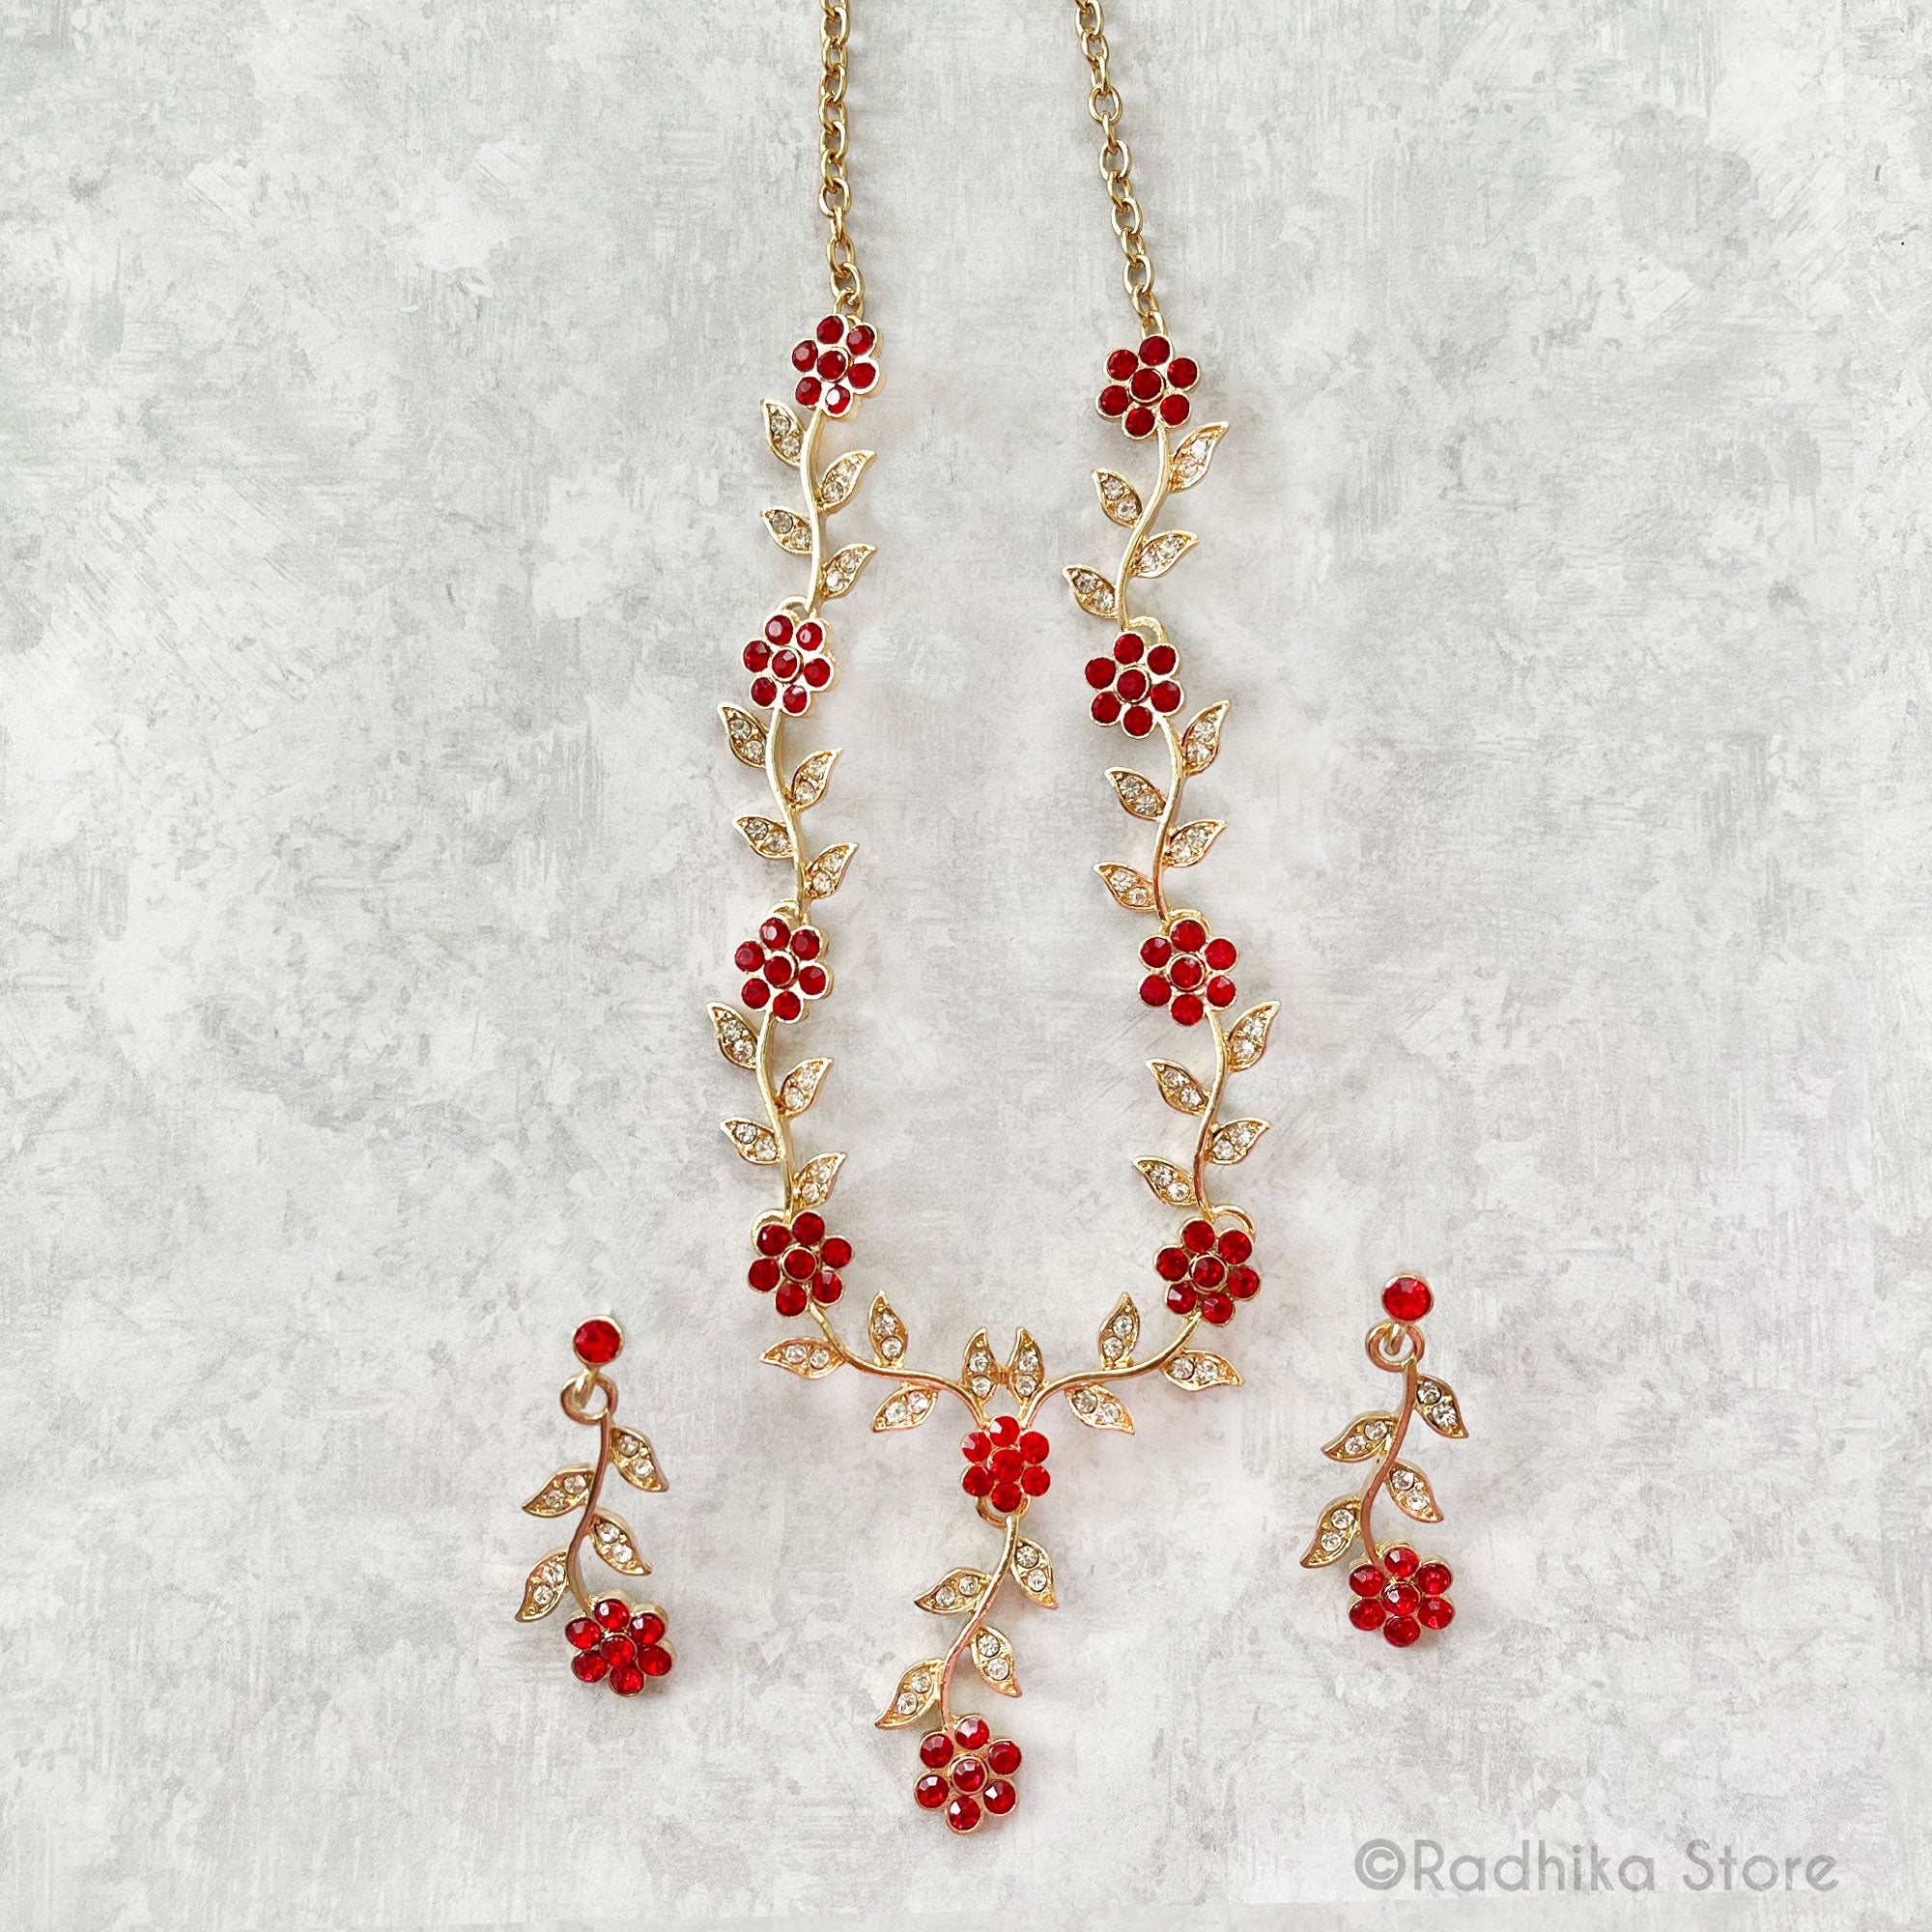 Vrindavan Flower Vine- Rhinestone Deity Necklace And Earring Set-Ruby-Emerald-Sapphire